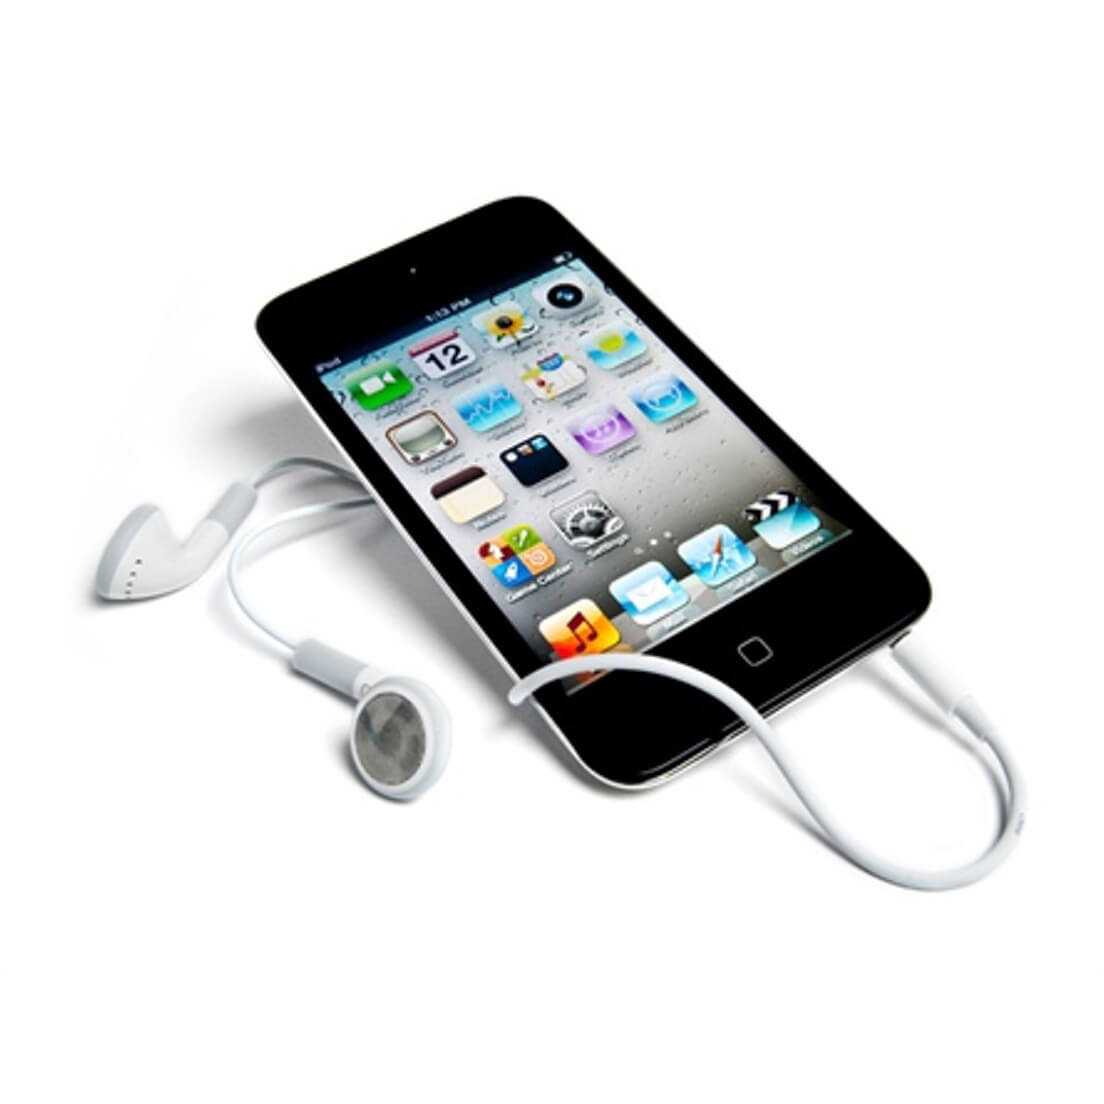 Apple ipod touch 4 8gb black - купить , скидки, цена, отзывы, обзор, характеристики - mp3 плееры